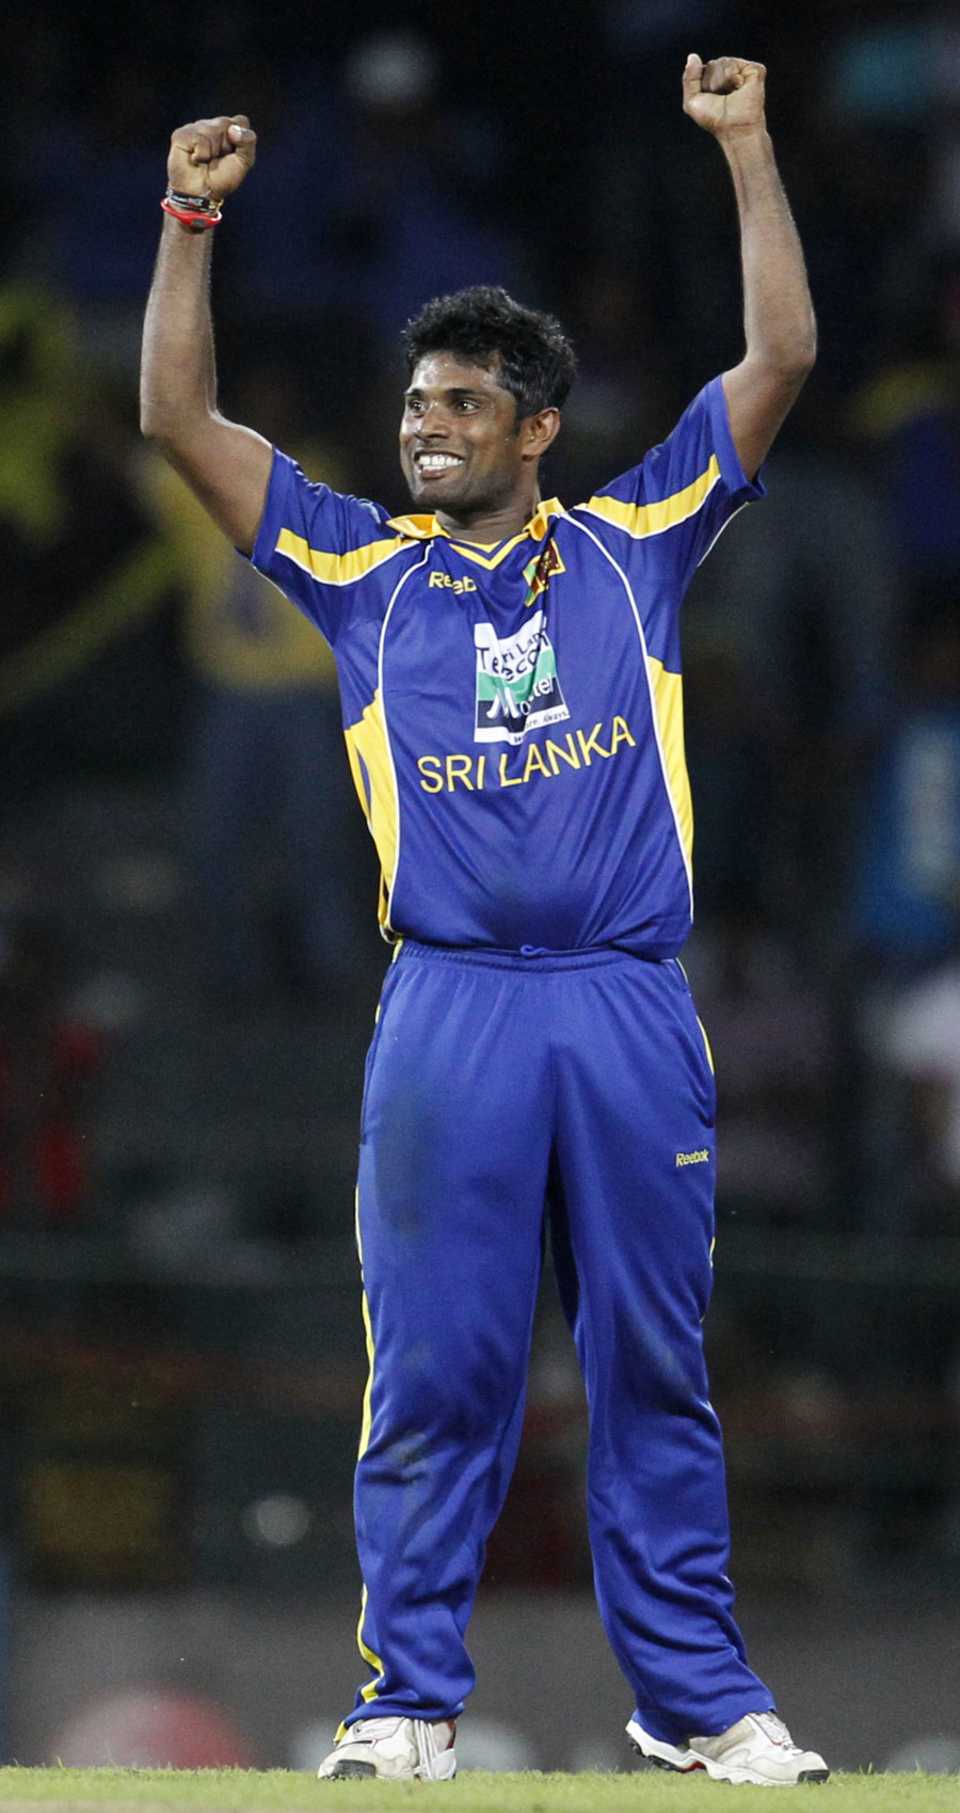 Seekkuge Prasanna picked up three wickets in an over, Sri Lanka v Australia, 4th ODI, R Premadasa Stadium, Colombo, August 20, 2011